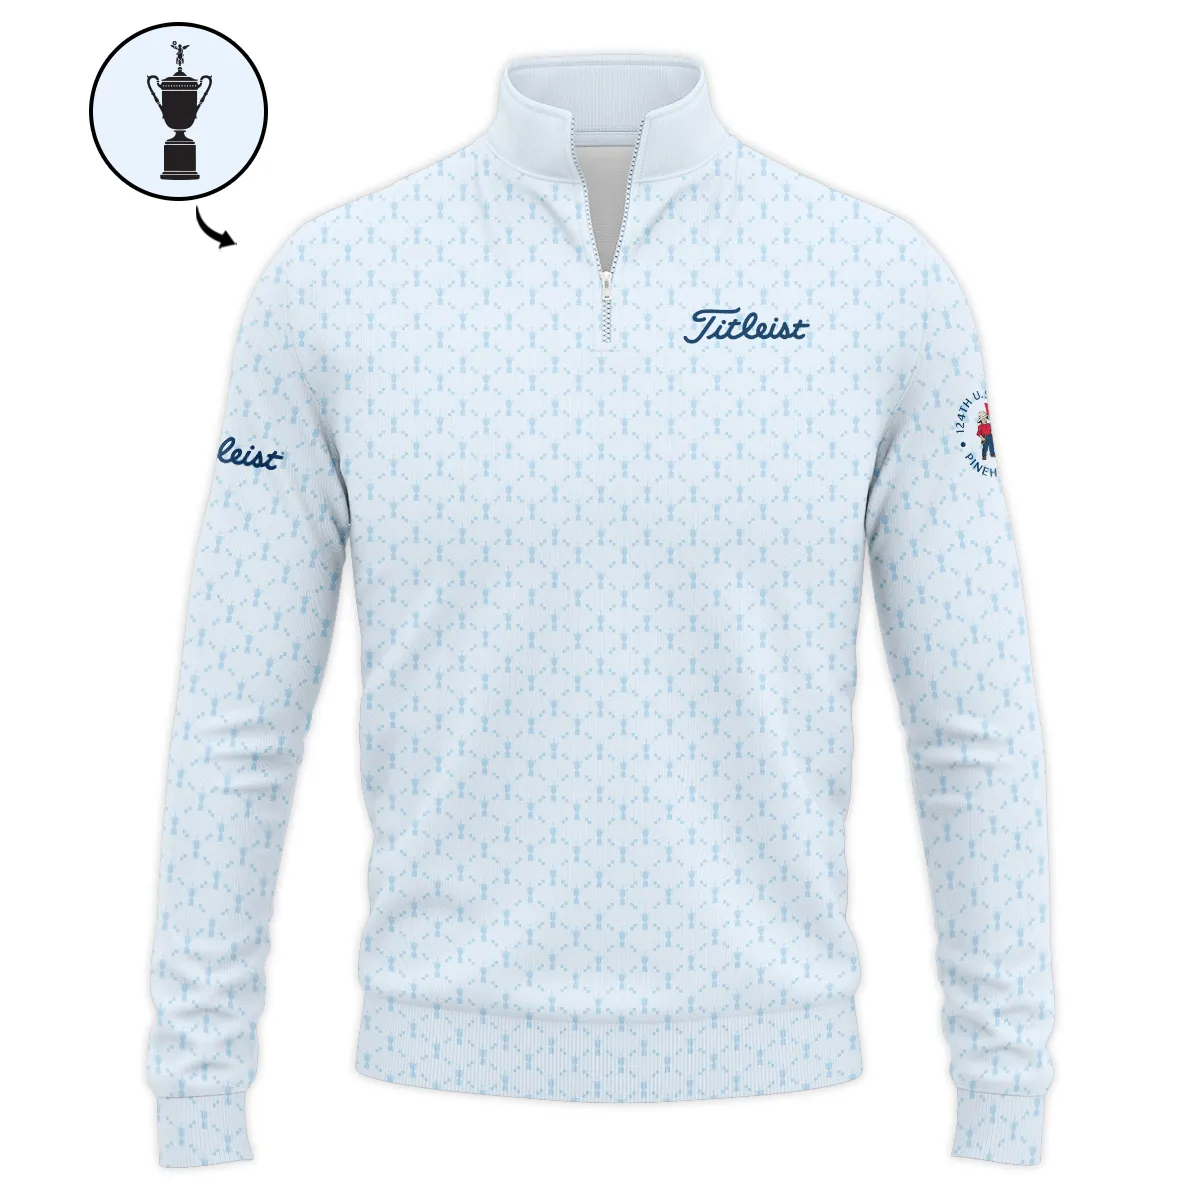 Golf Sport Pattern Blue Sport Uniform 124th U.S. Open Pinehurst Titleist Vneck Polo Shirt Style Classic